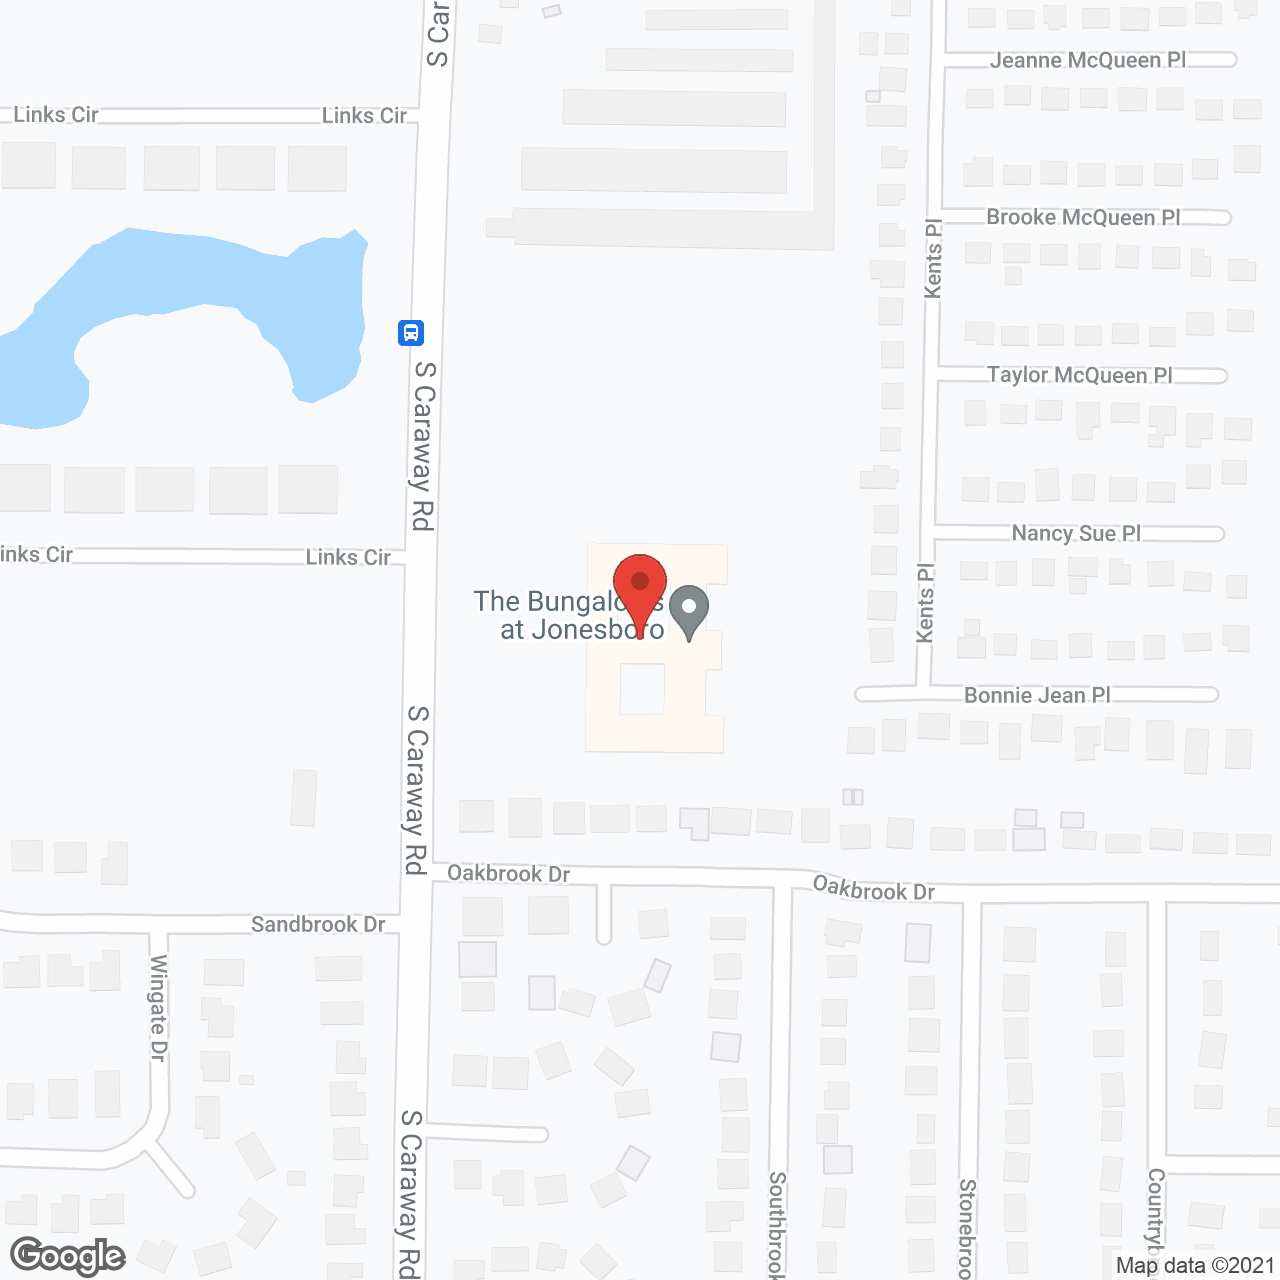 The Bungalows at Jonesboro in google map